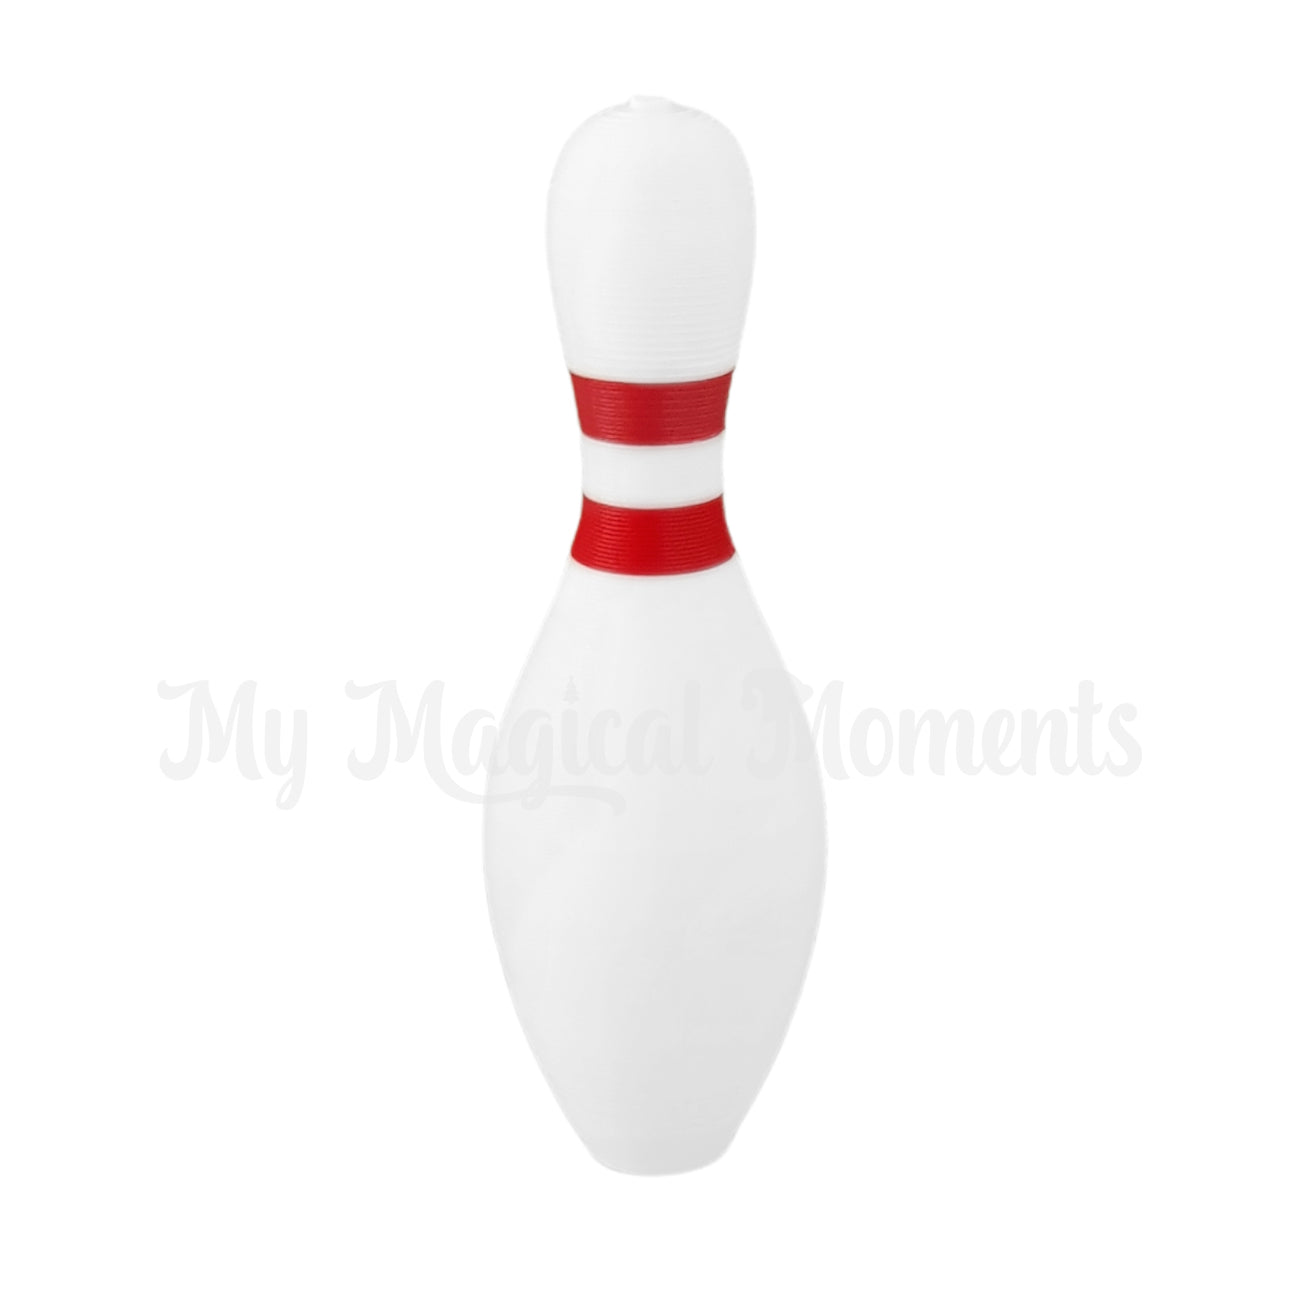 Miniature bowling pin